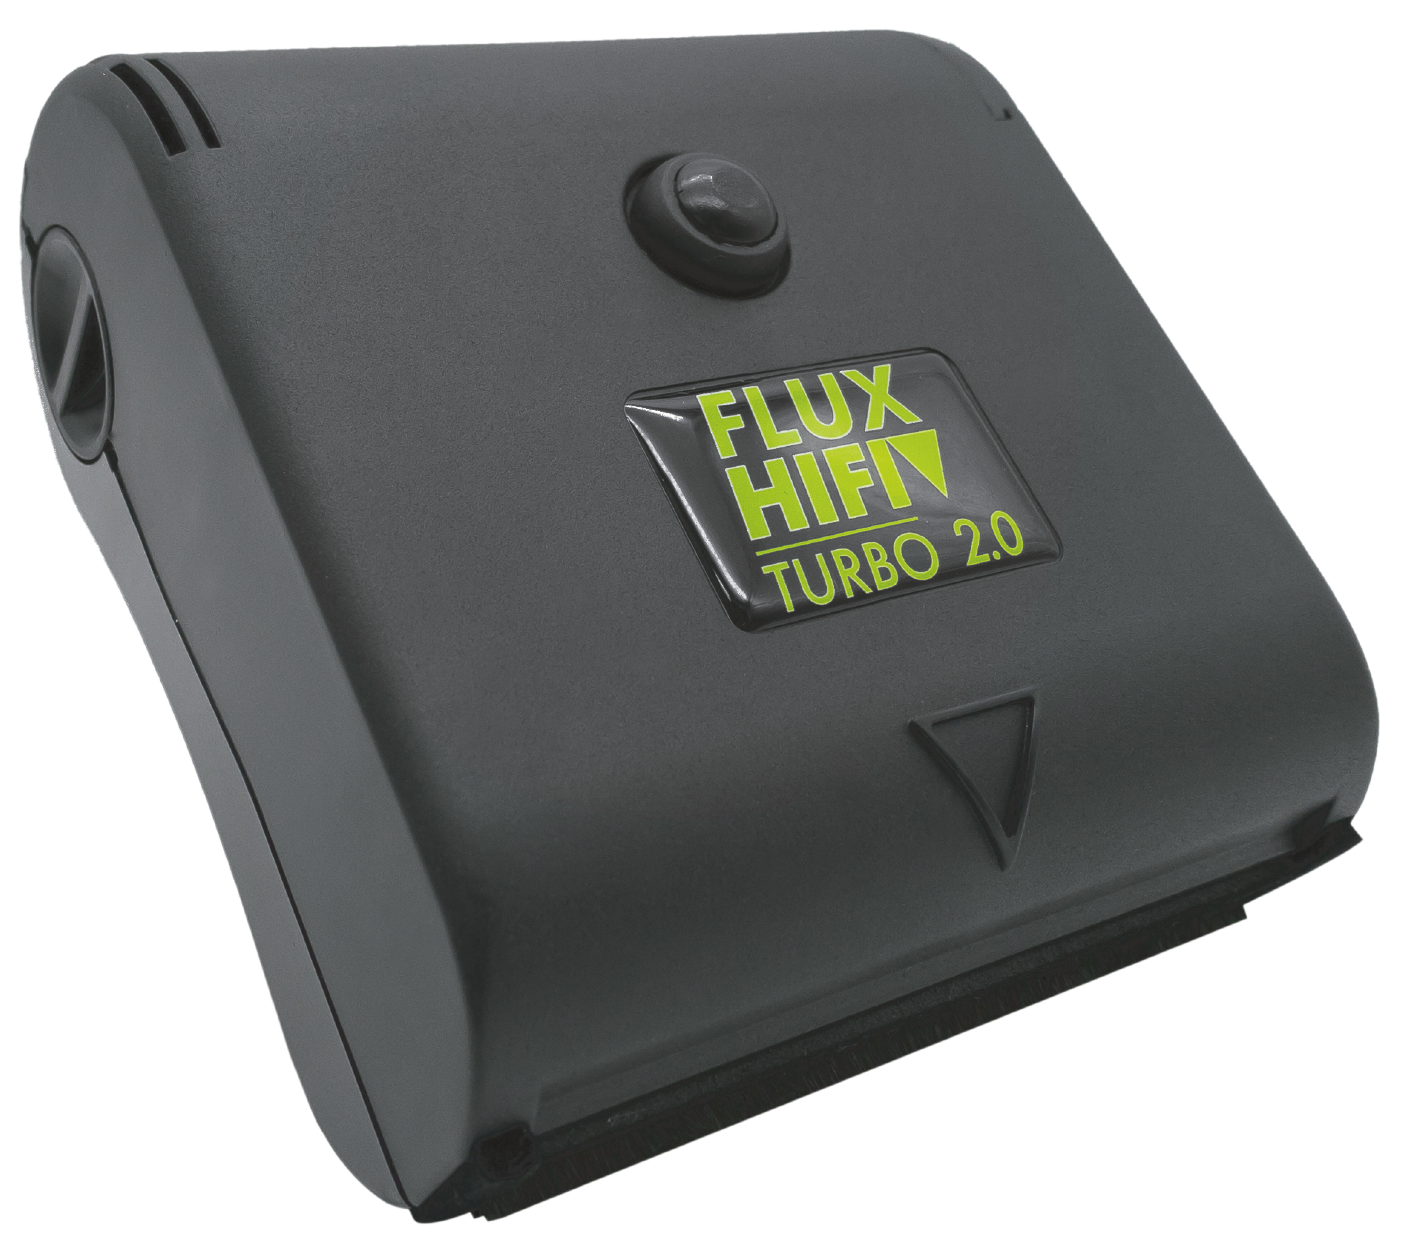 FLUX-Turbo 2.0